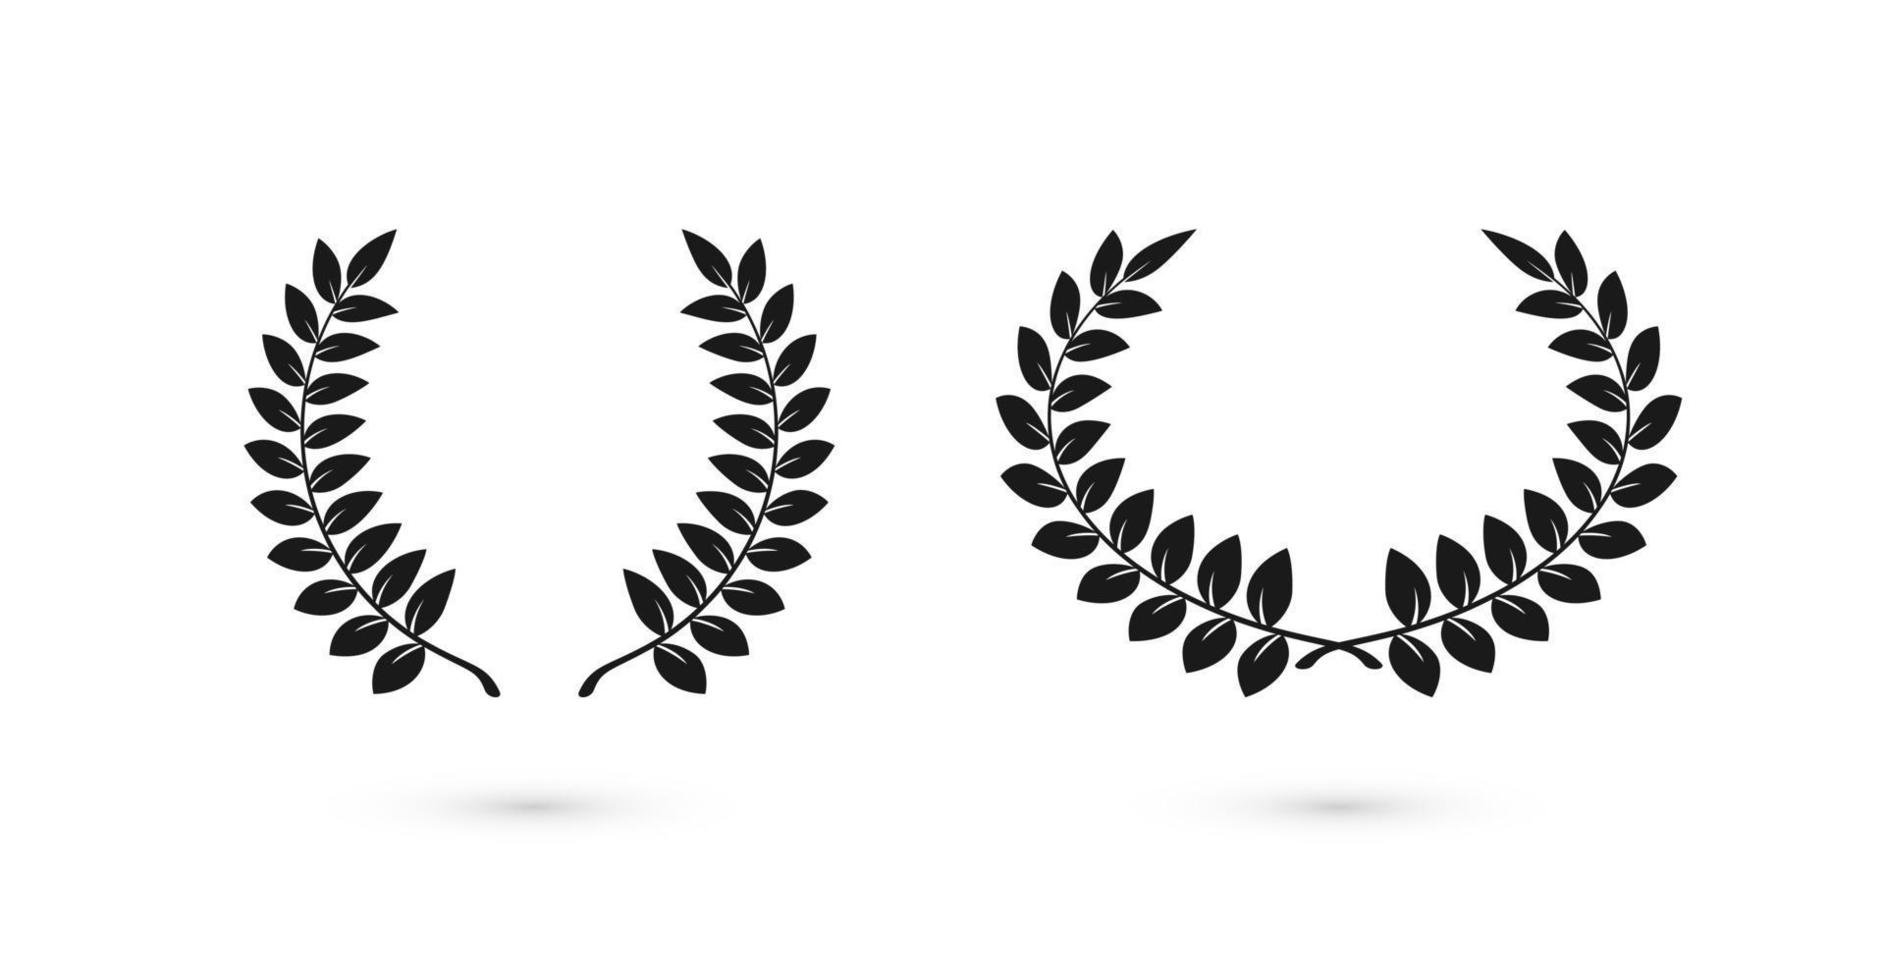 Laurel wreaths icons for web design. Award sign. Vector illustration